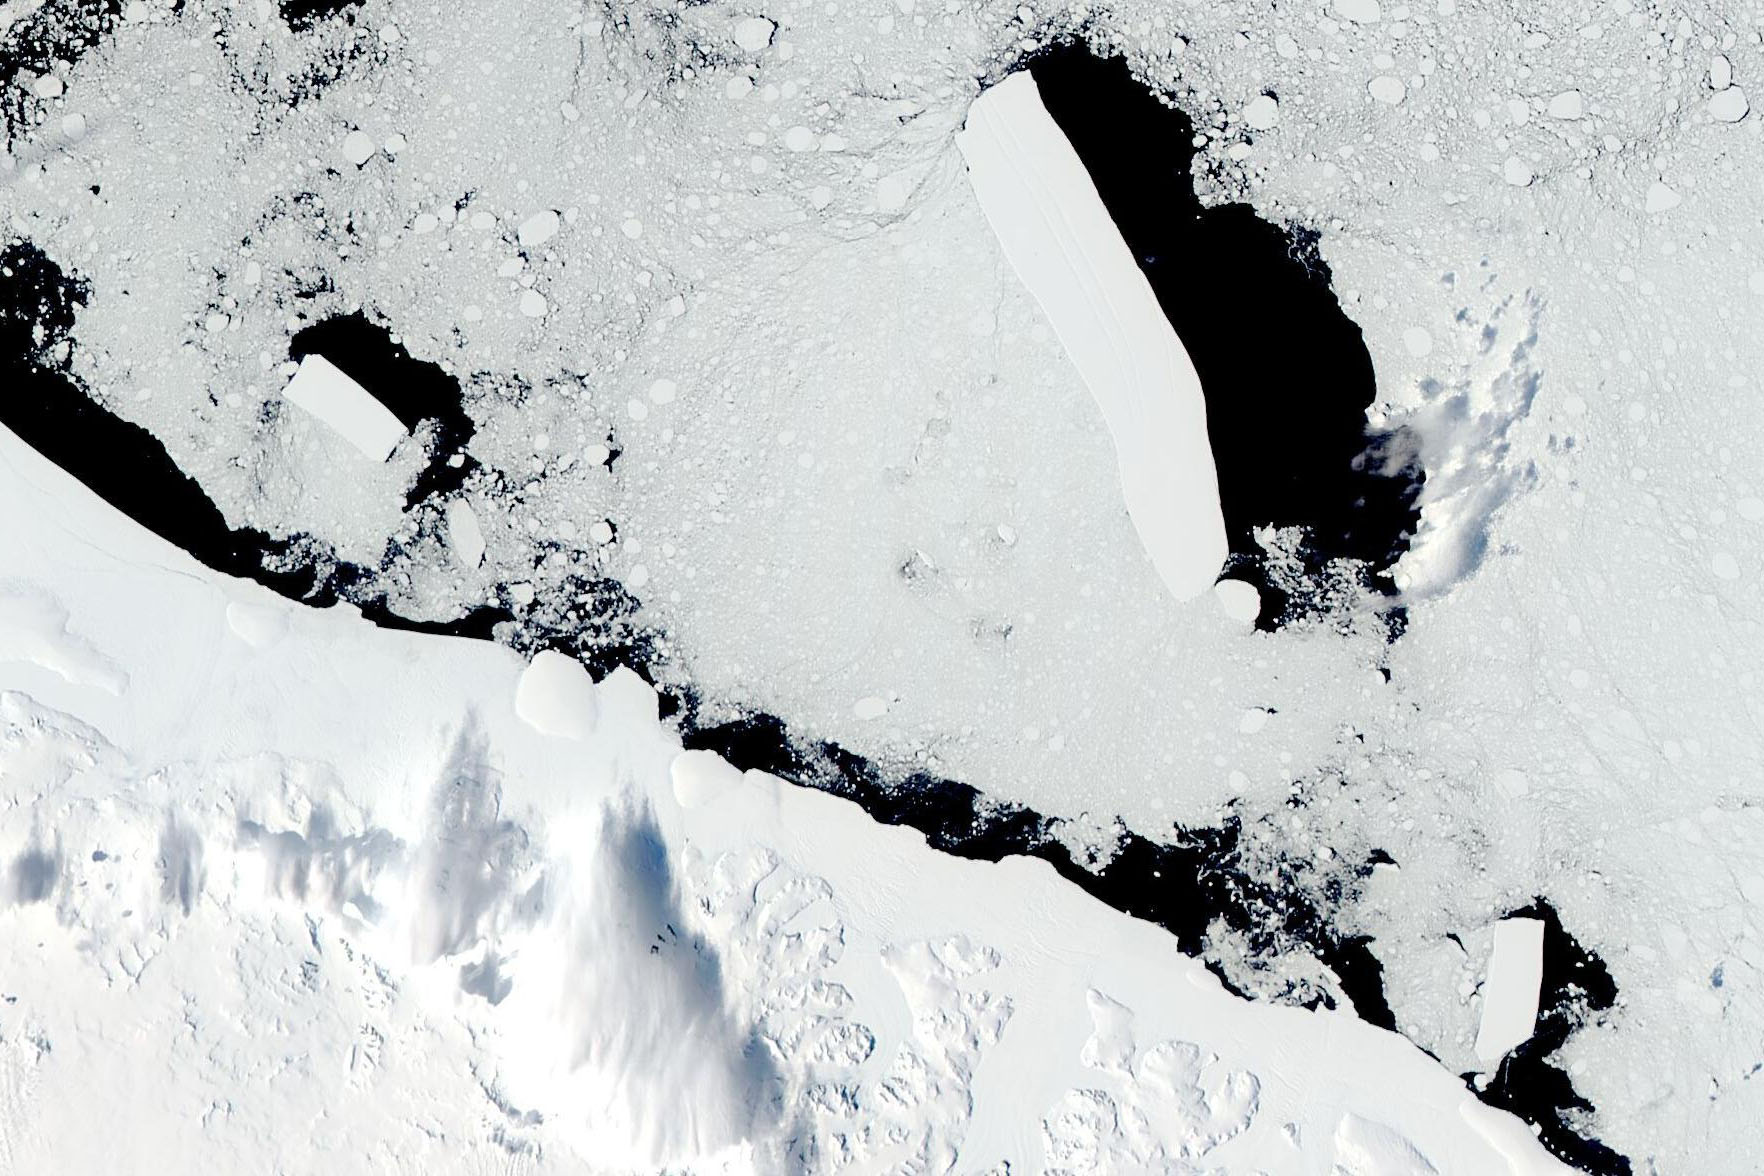 Understanding climate: Antarctic sea ice extent